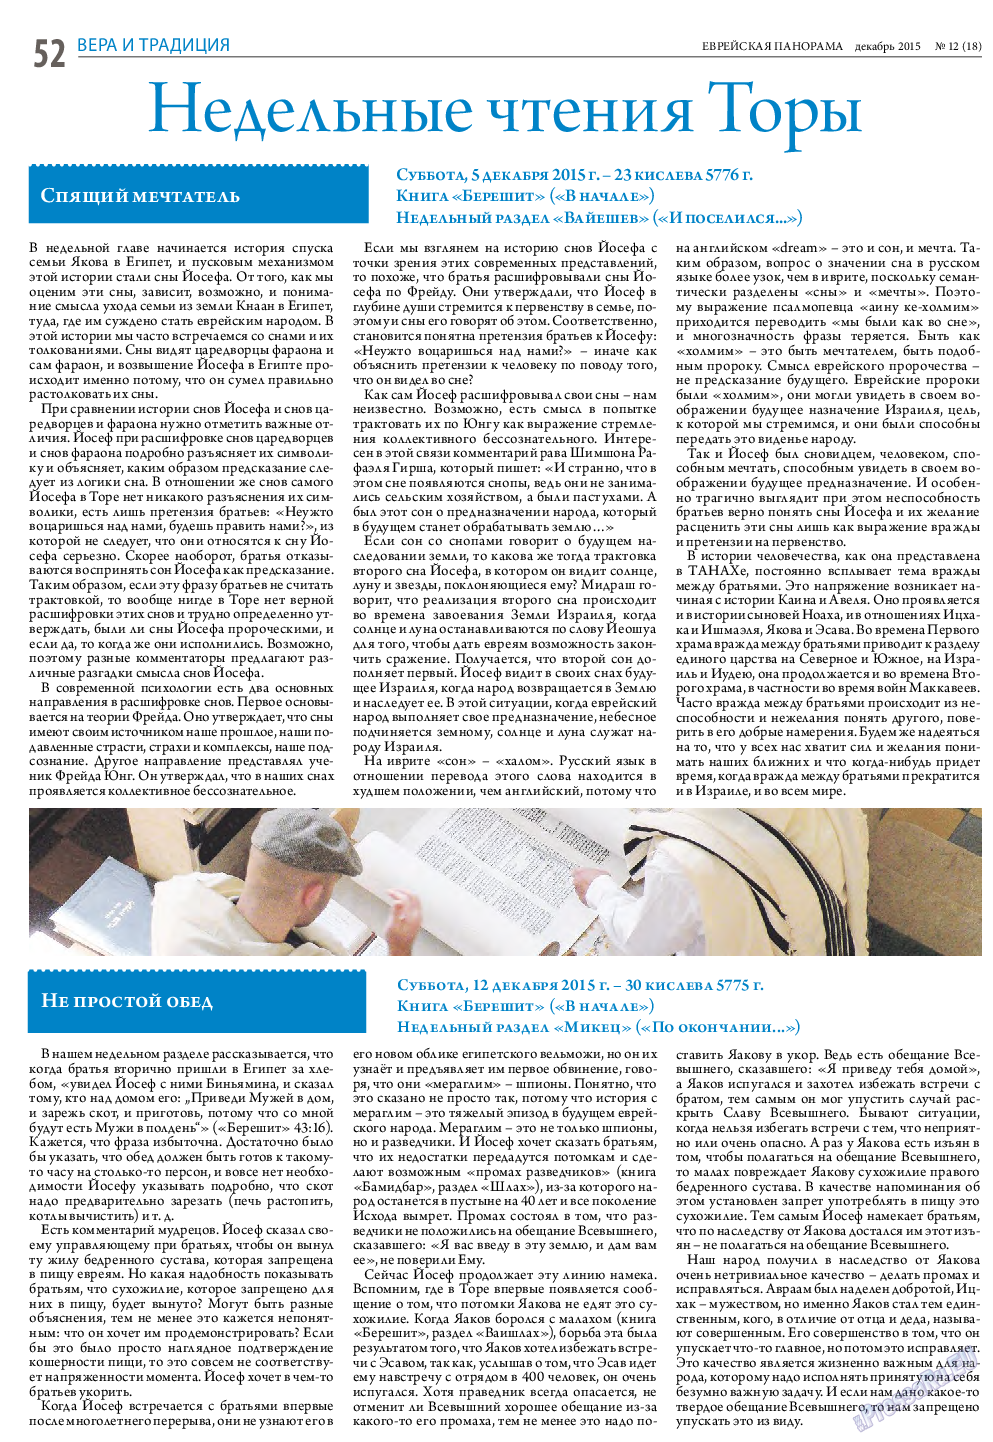 Еврейская панорама, газета. 2015 №12 стр.52